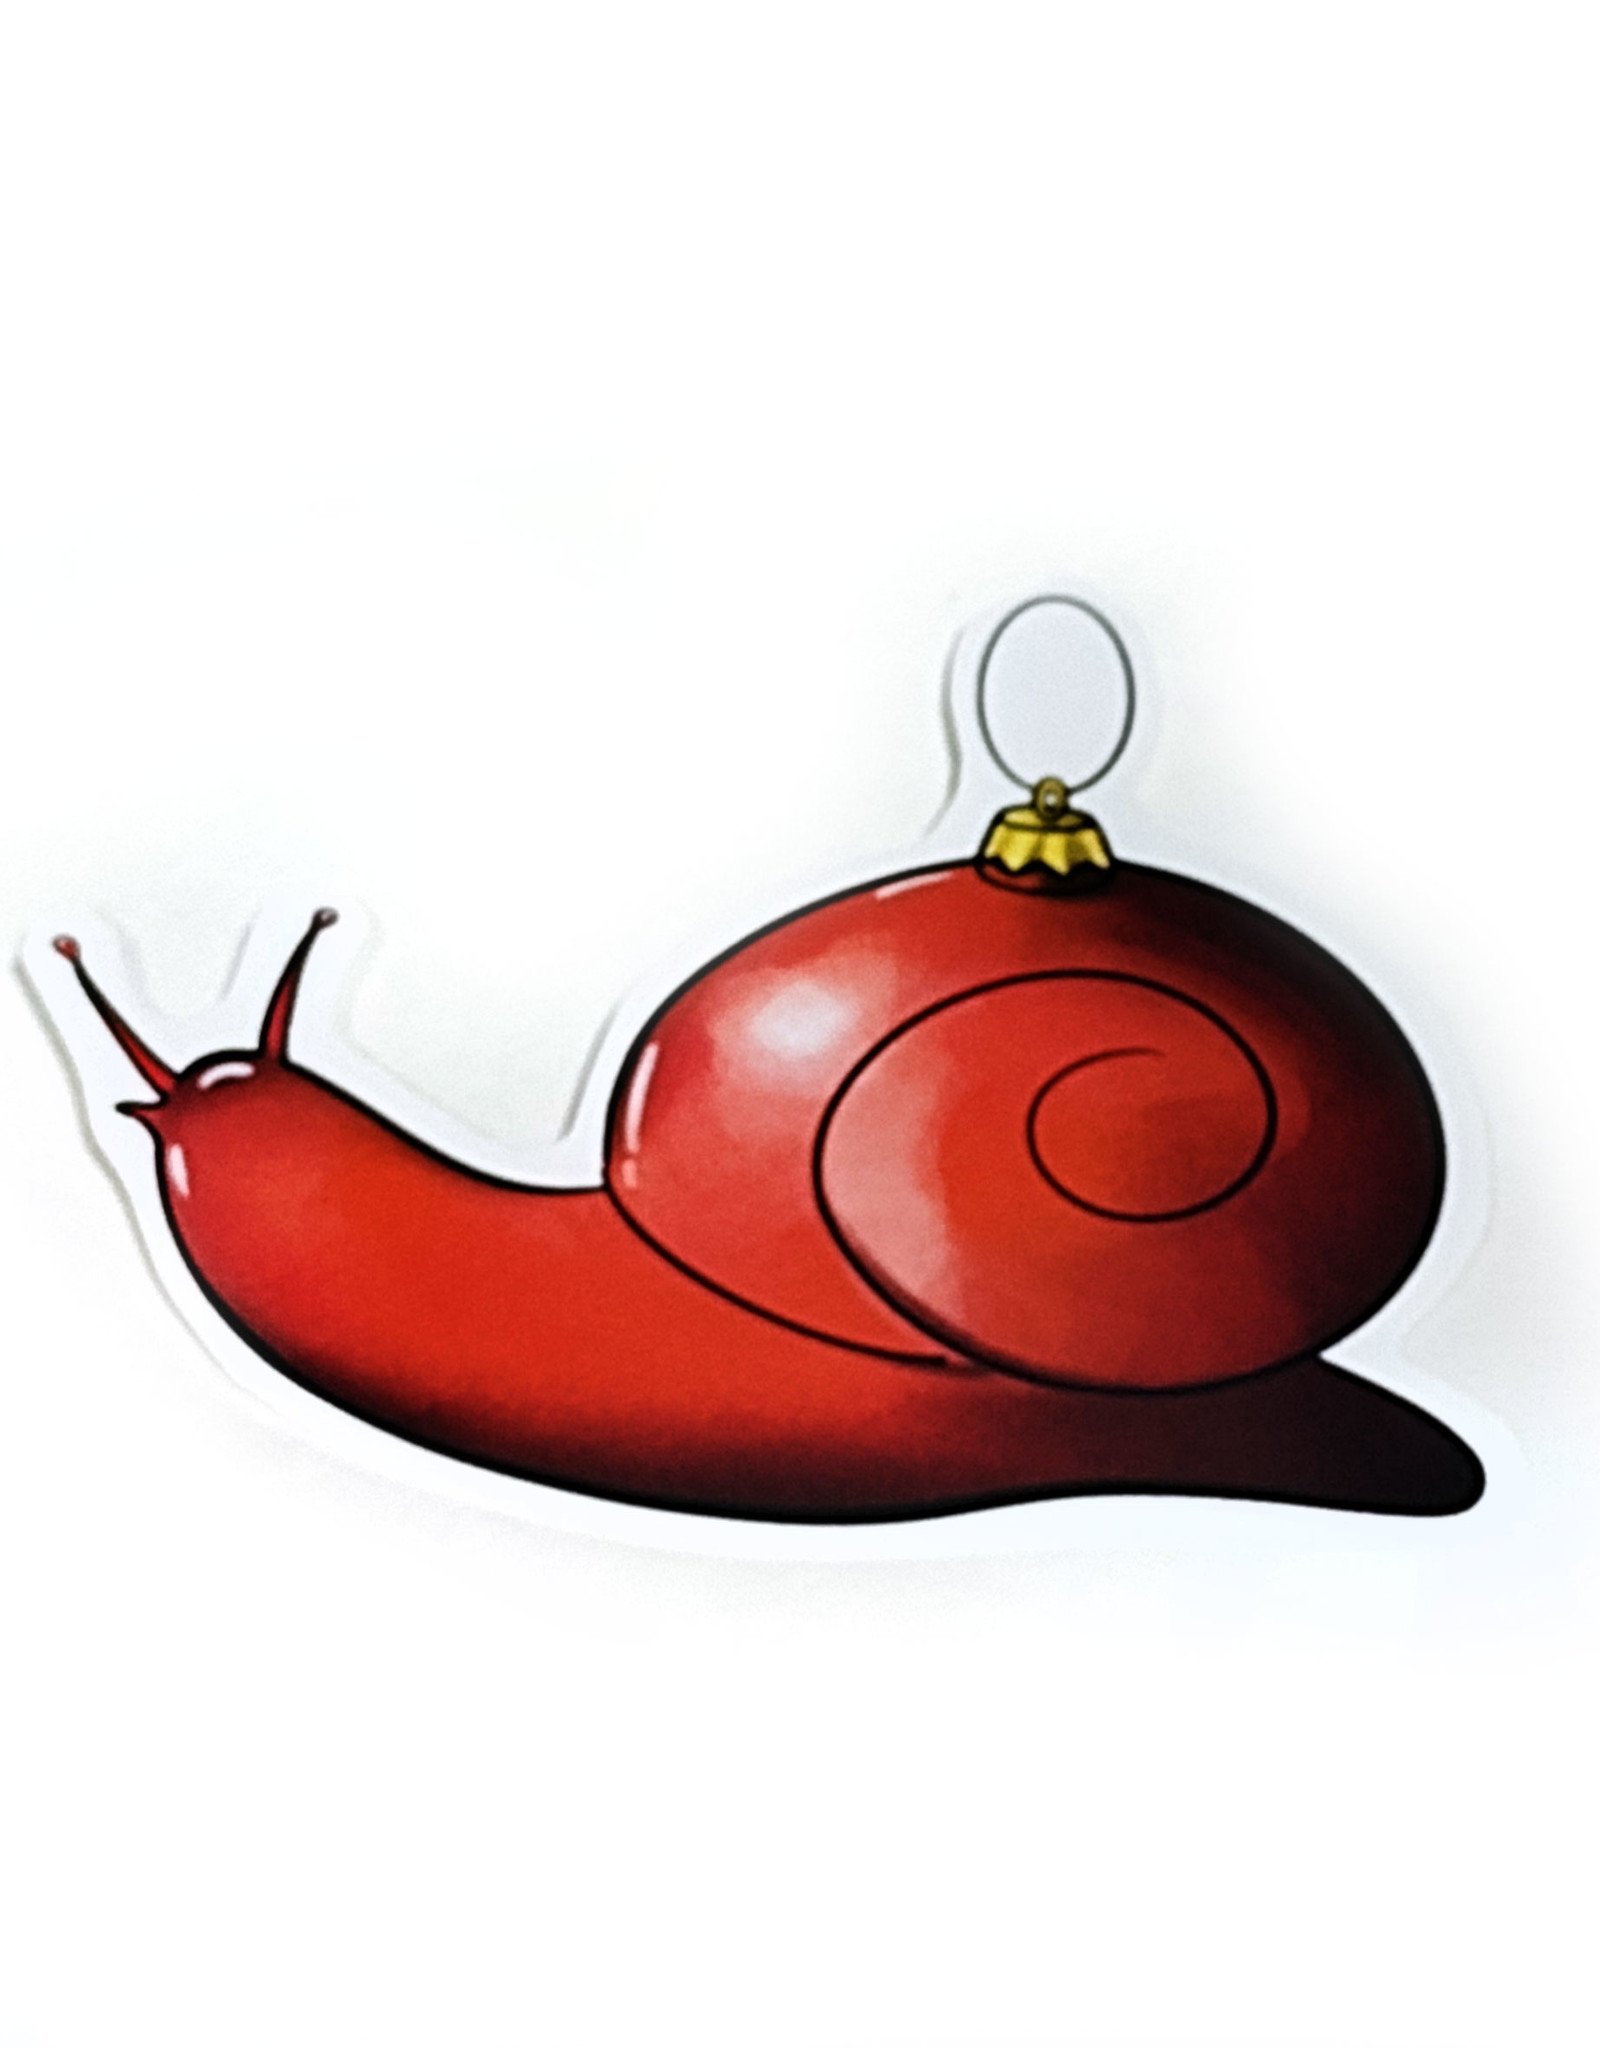 "Ornament Snail" Sticker  by Nick Hides Art